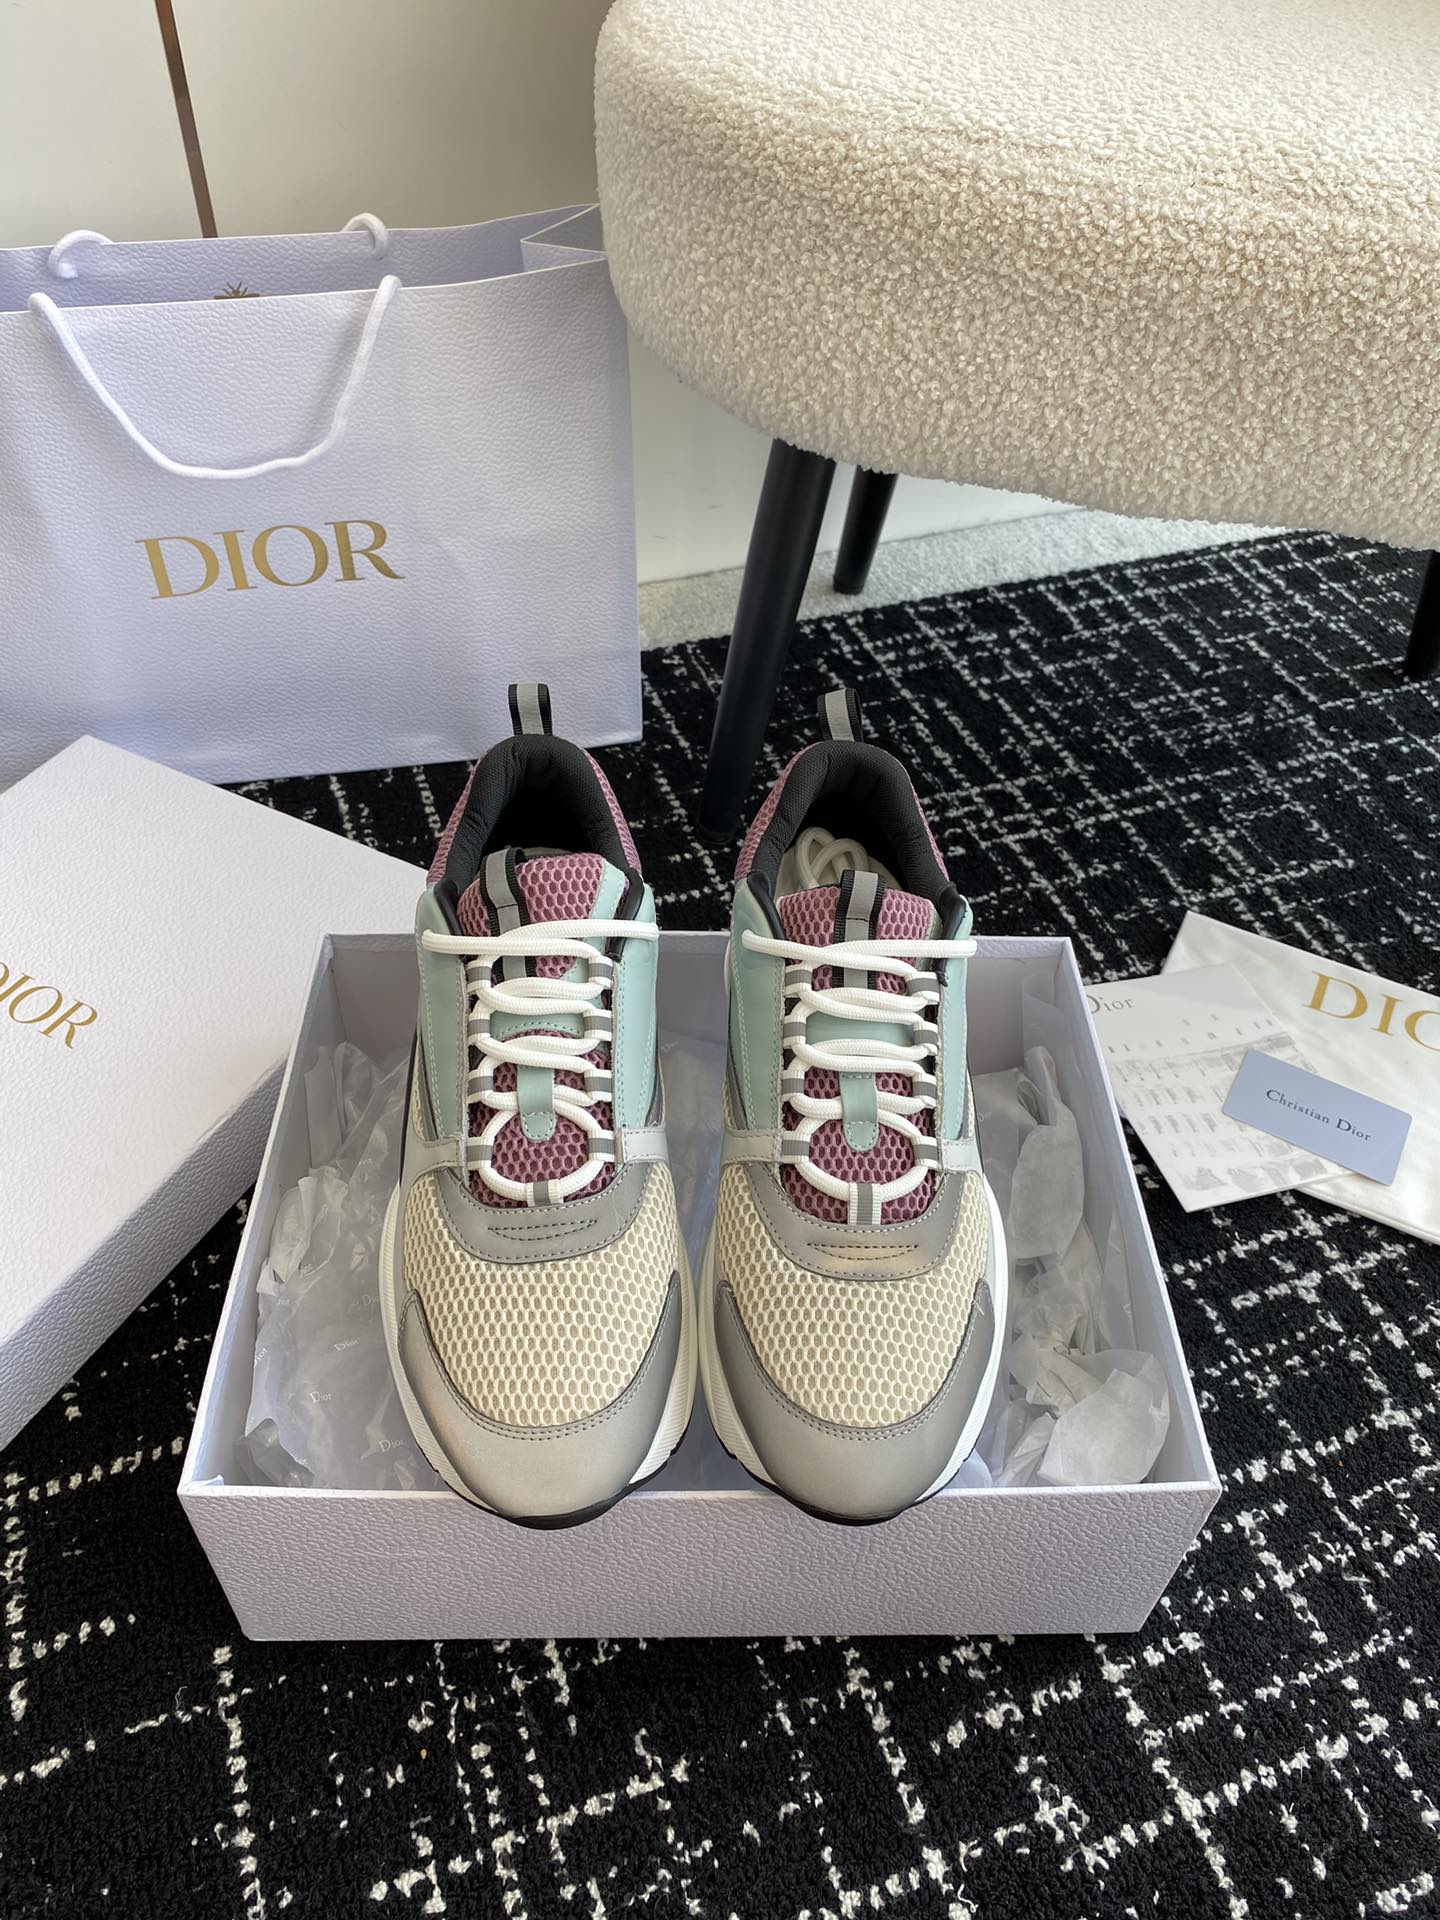 Dior Shoes Sneakers Splicing Unisex Women Men Rubber Fashion Casual